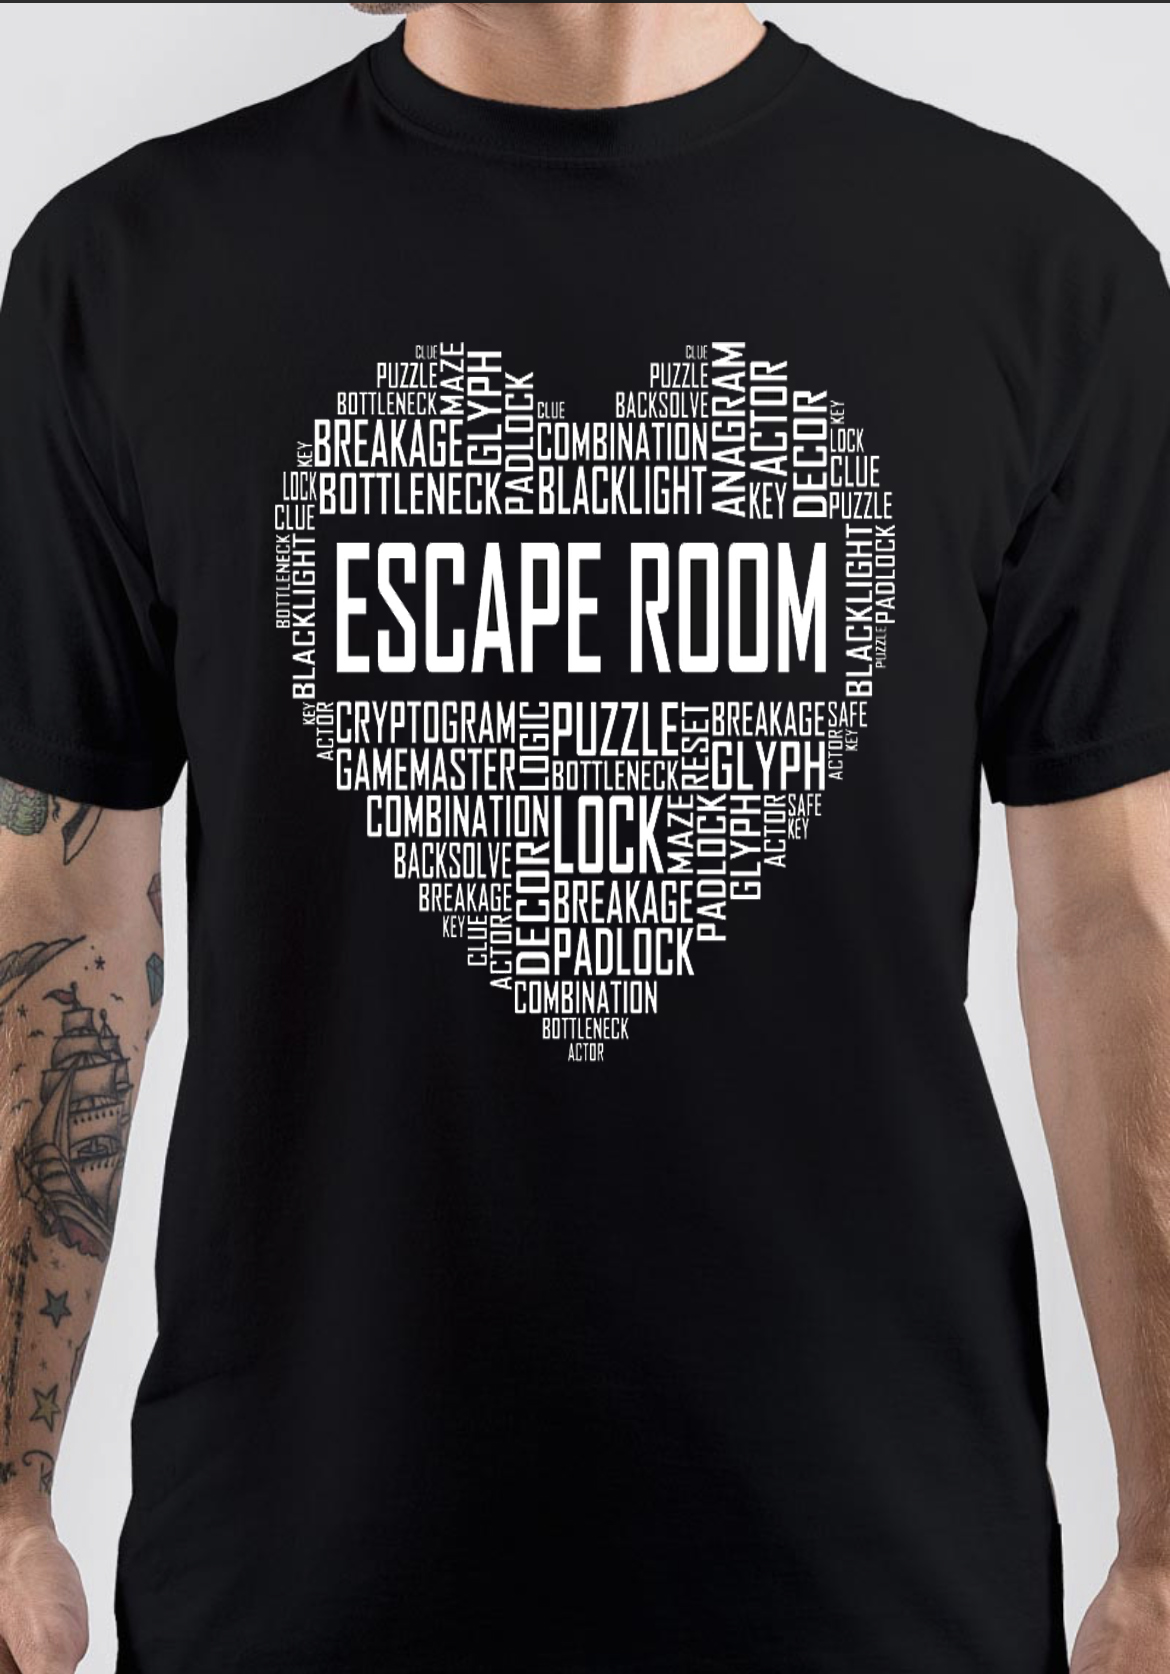 Escape Room T-Shirt And Merchandise